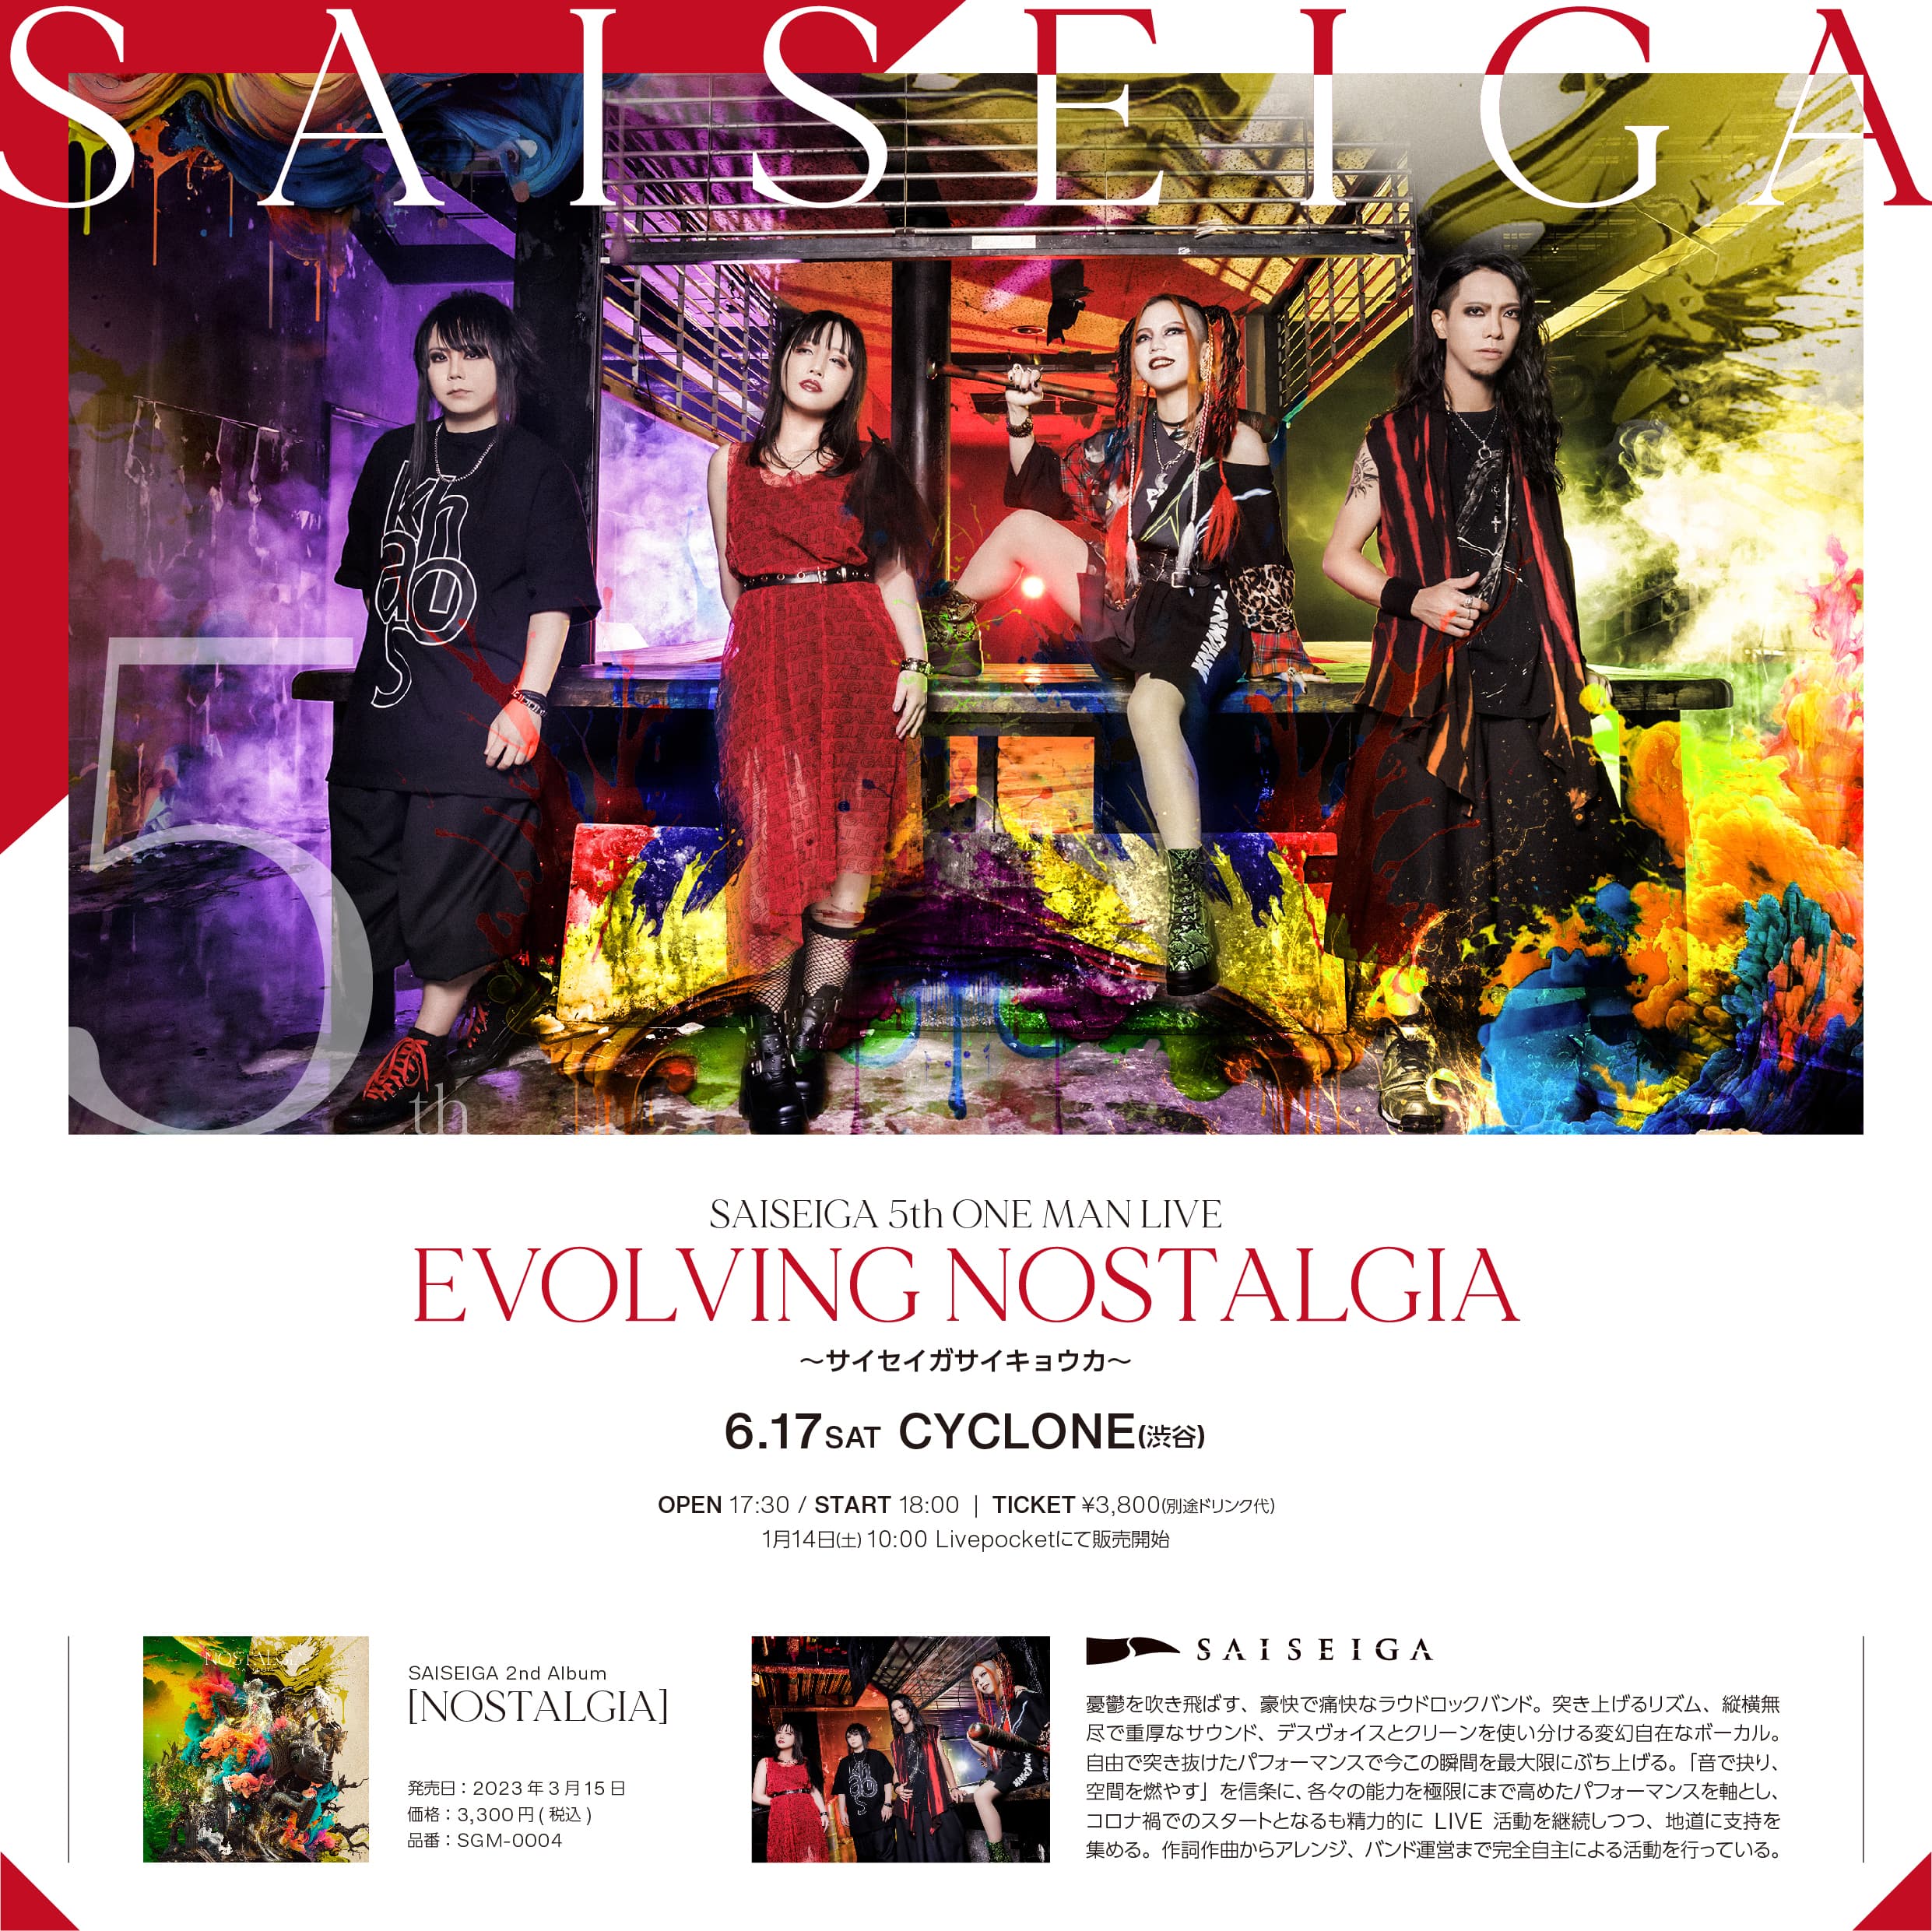 SAISEIGA 5th ONE MAN LIVE【EVOLVING NOSTALGIA 〜サイセイガサイキョウカ〜】